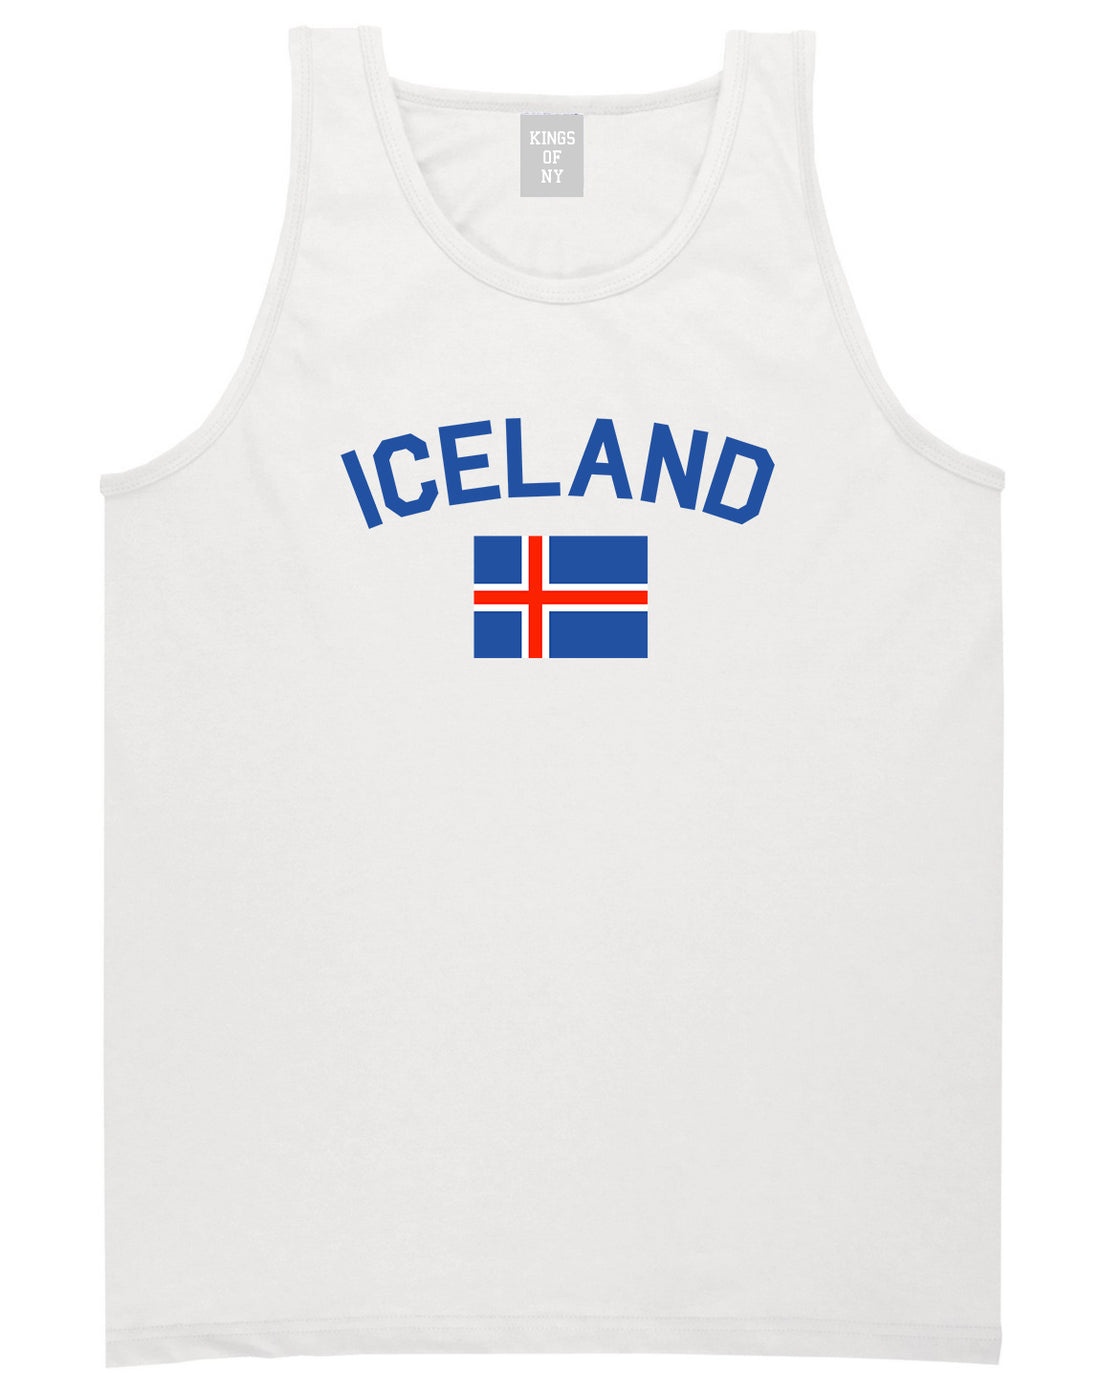 Iceland With Icelandic Flag Souvenir Mens Tank Top Shirt White